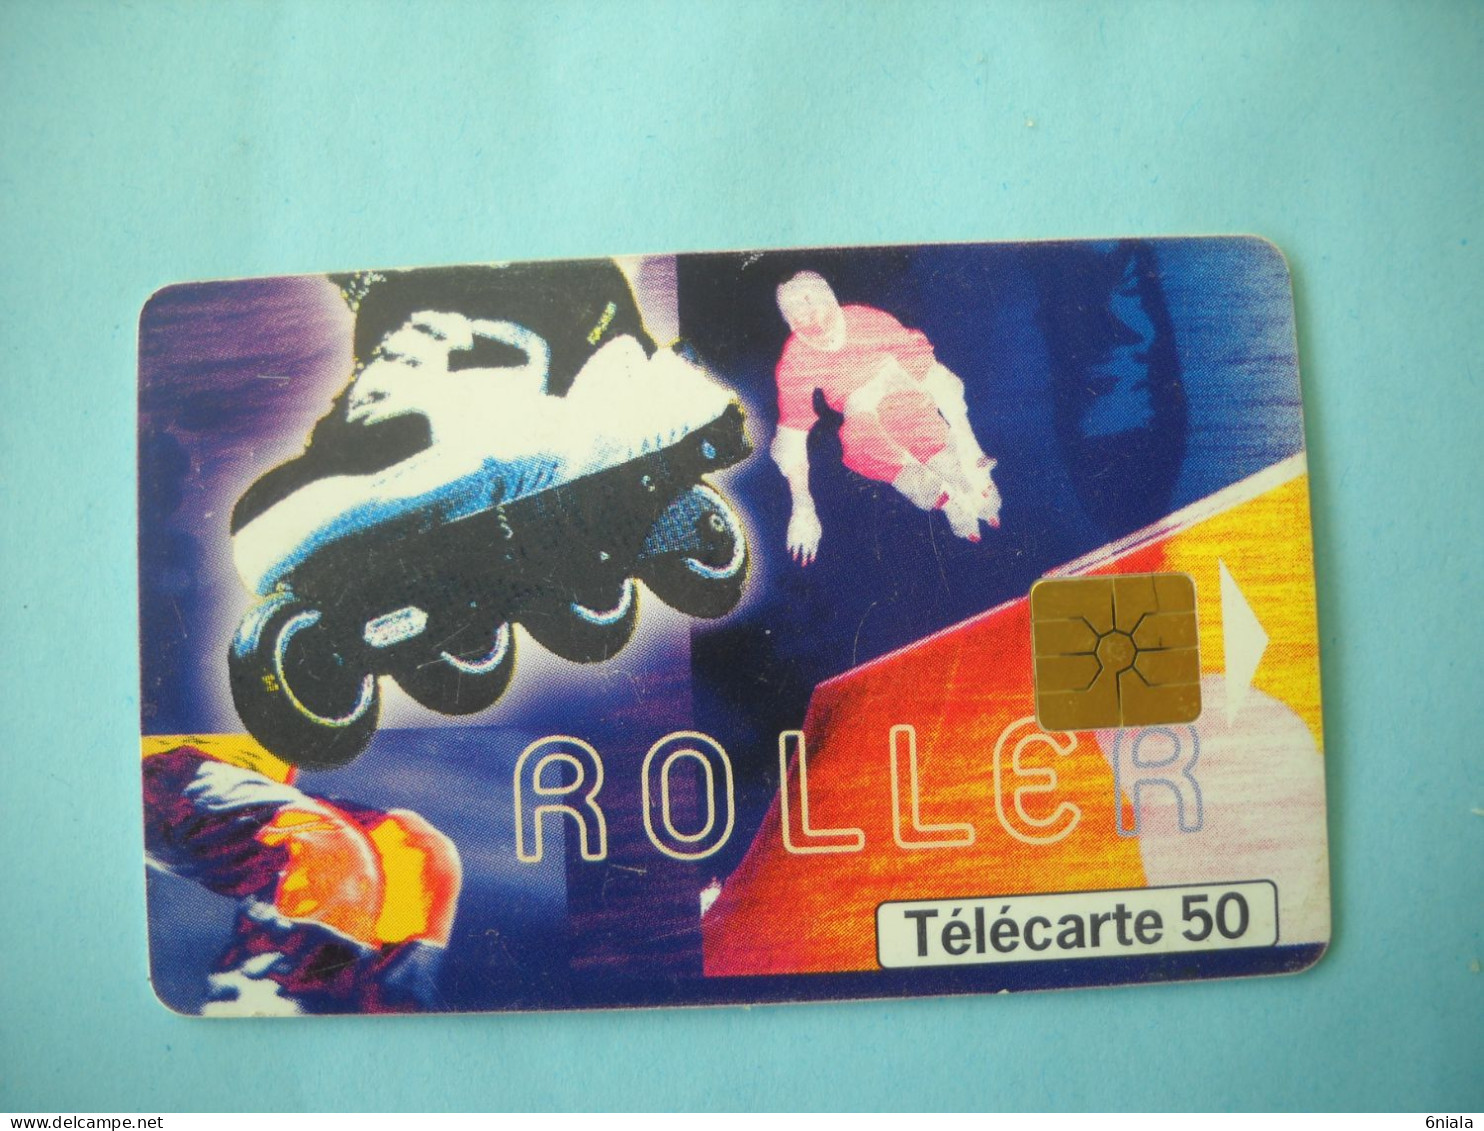 7612 Télécarte  Collection Street Culture ROLLER   N° 1  SPORT ( 2 Scans ) 50 U   500 000 Ex - Sport